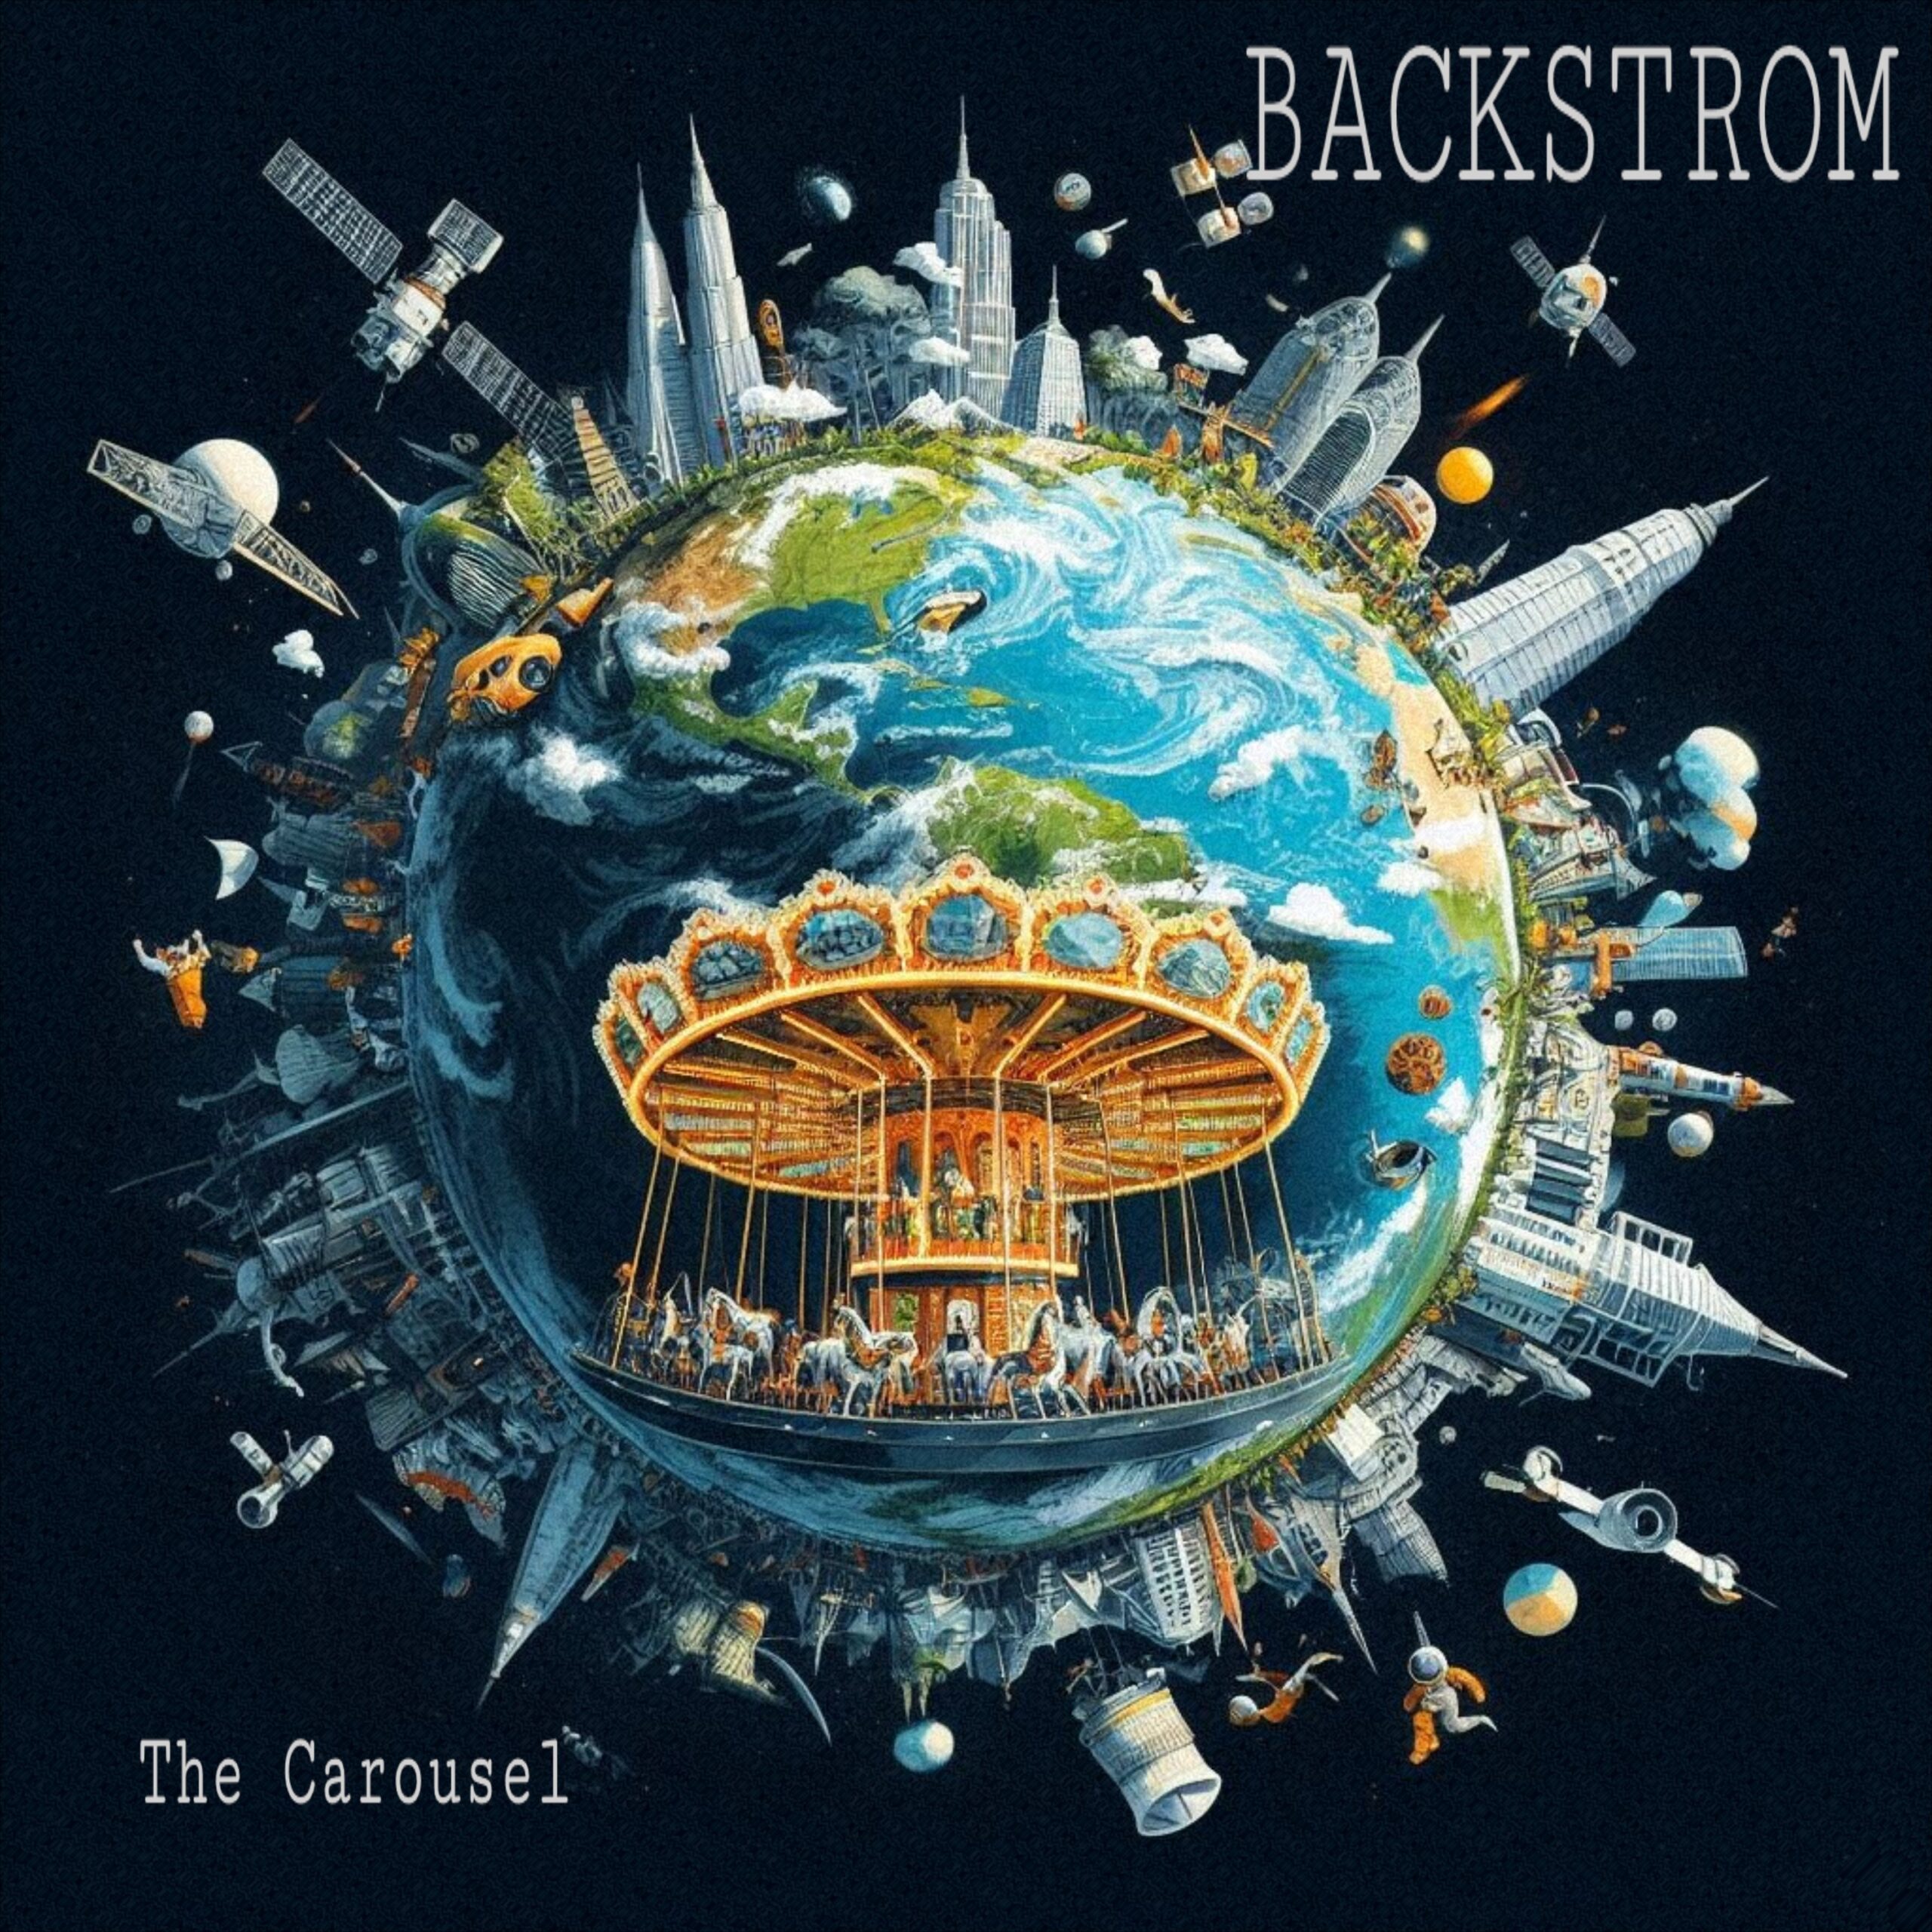  Explora la singularidad musical de Backstrom en “The Carousel”